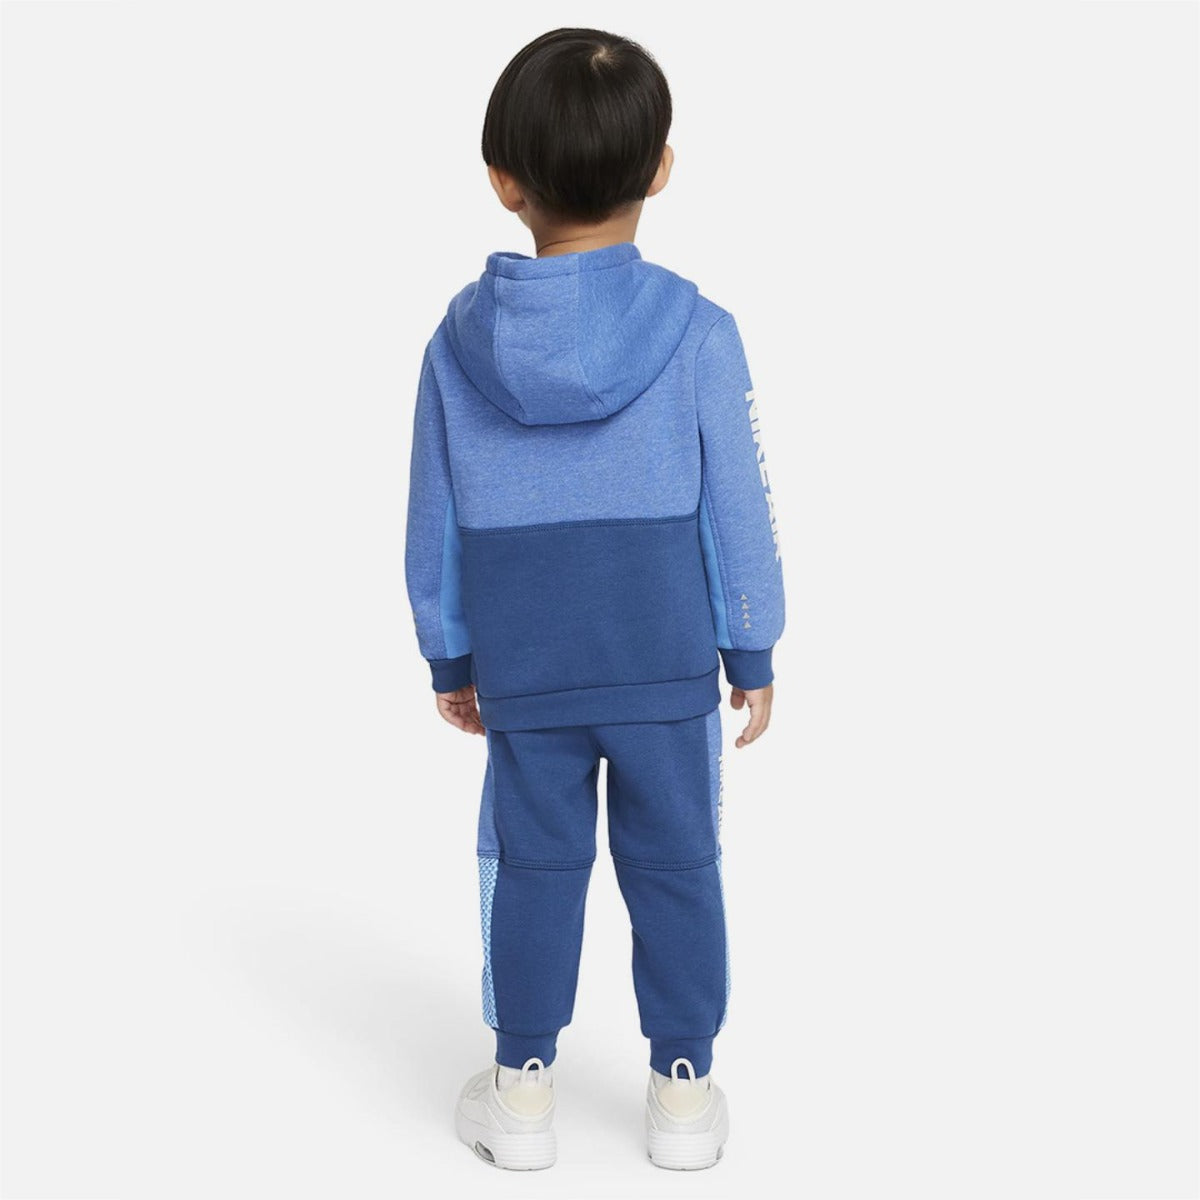 Nike Air Baby Tracksuit Set - Blue/White